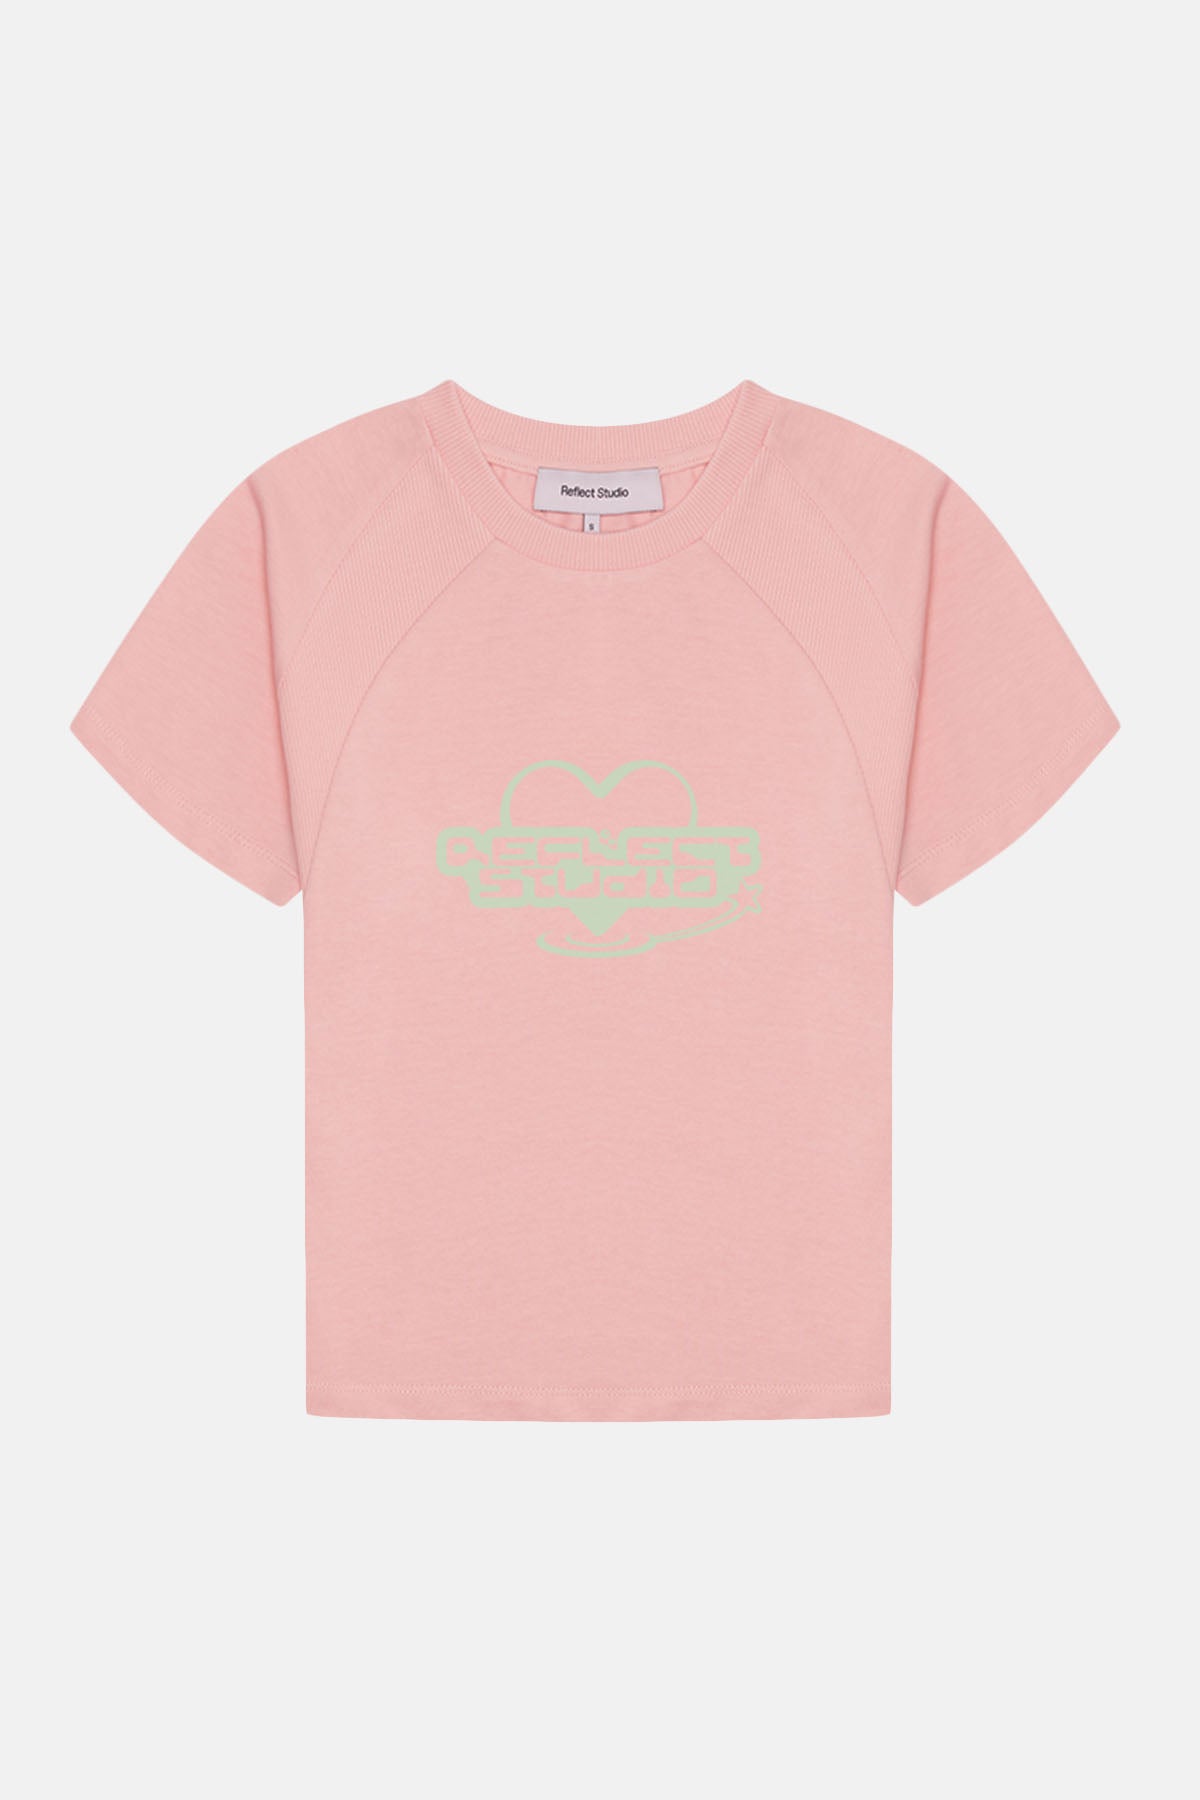 Logo Baby Tee - Quartz Pink